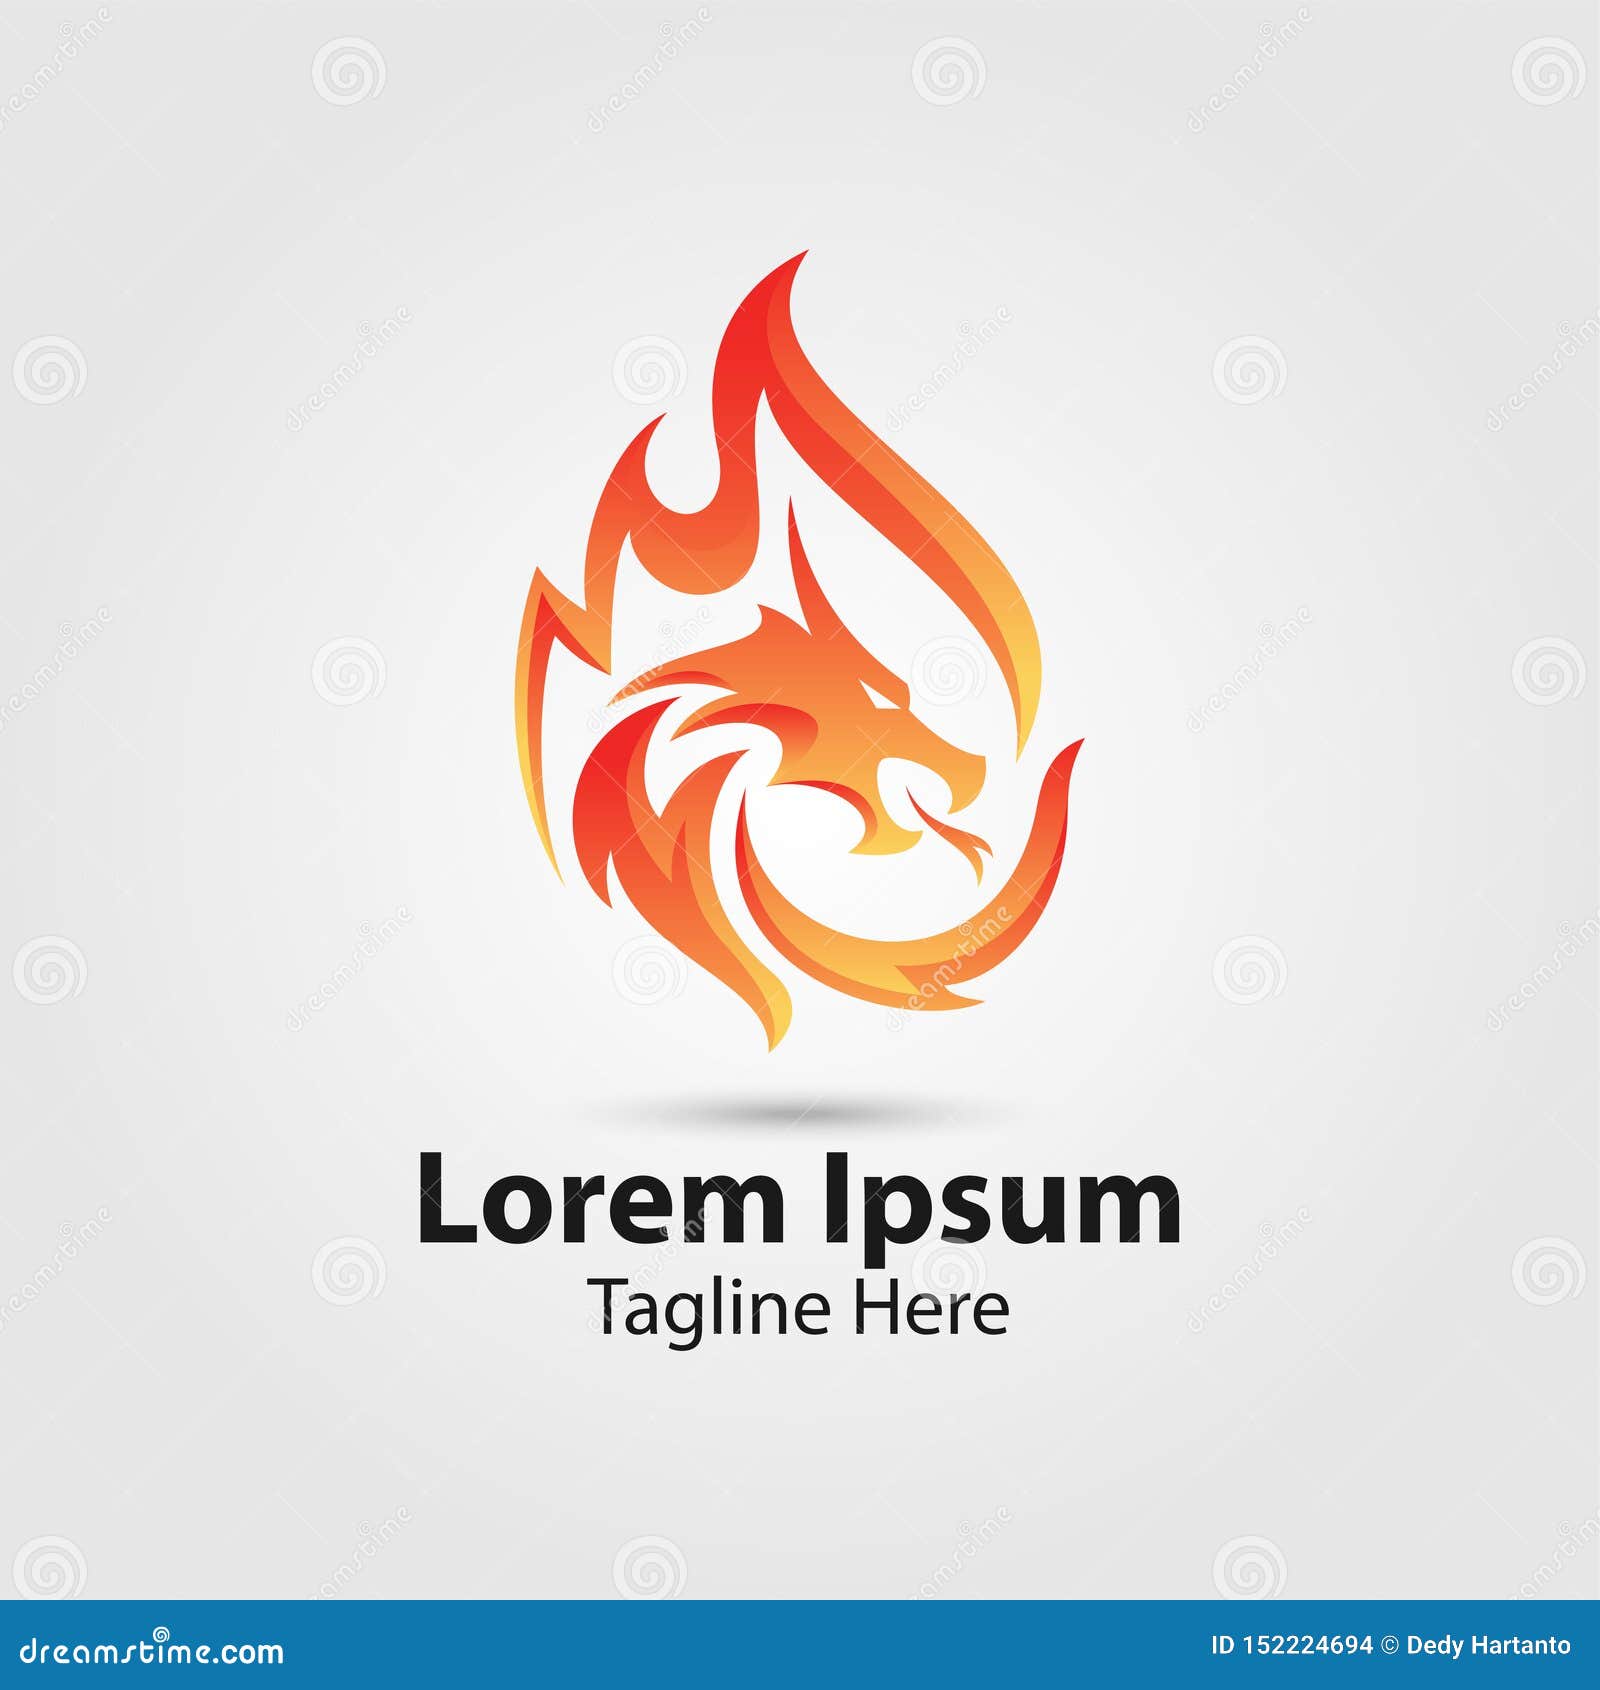 Premium Vector | Fire logo design illustration and fire symbol